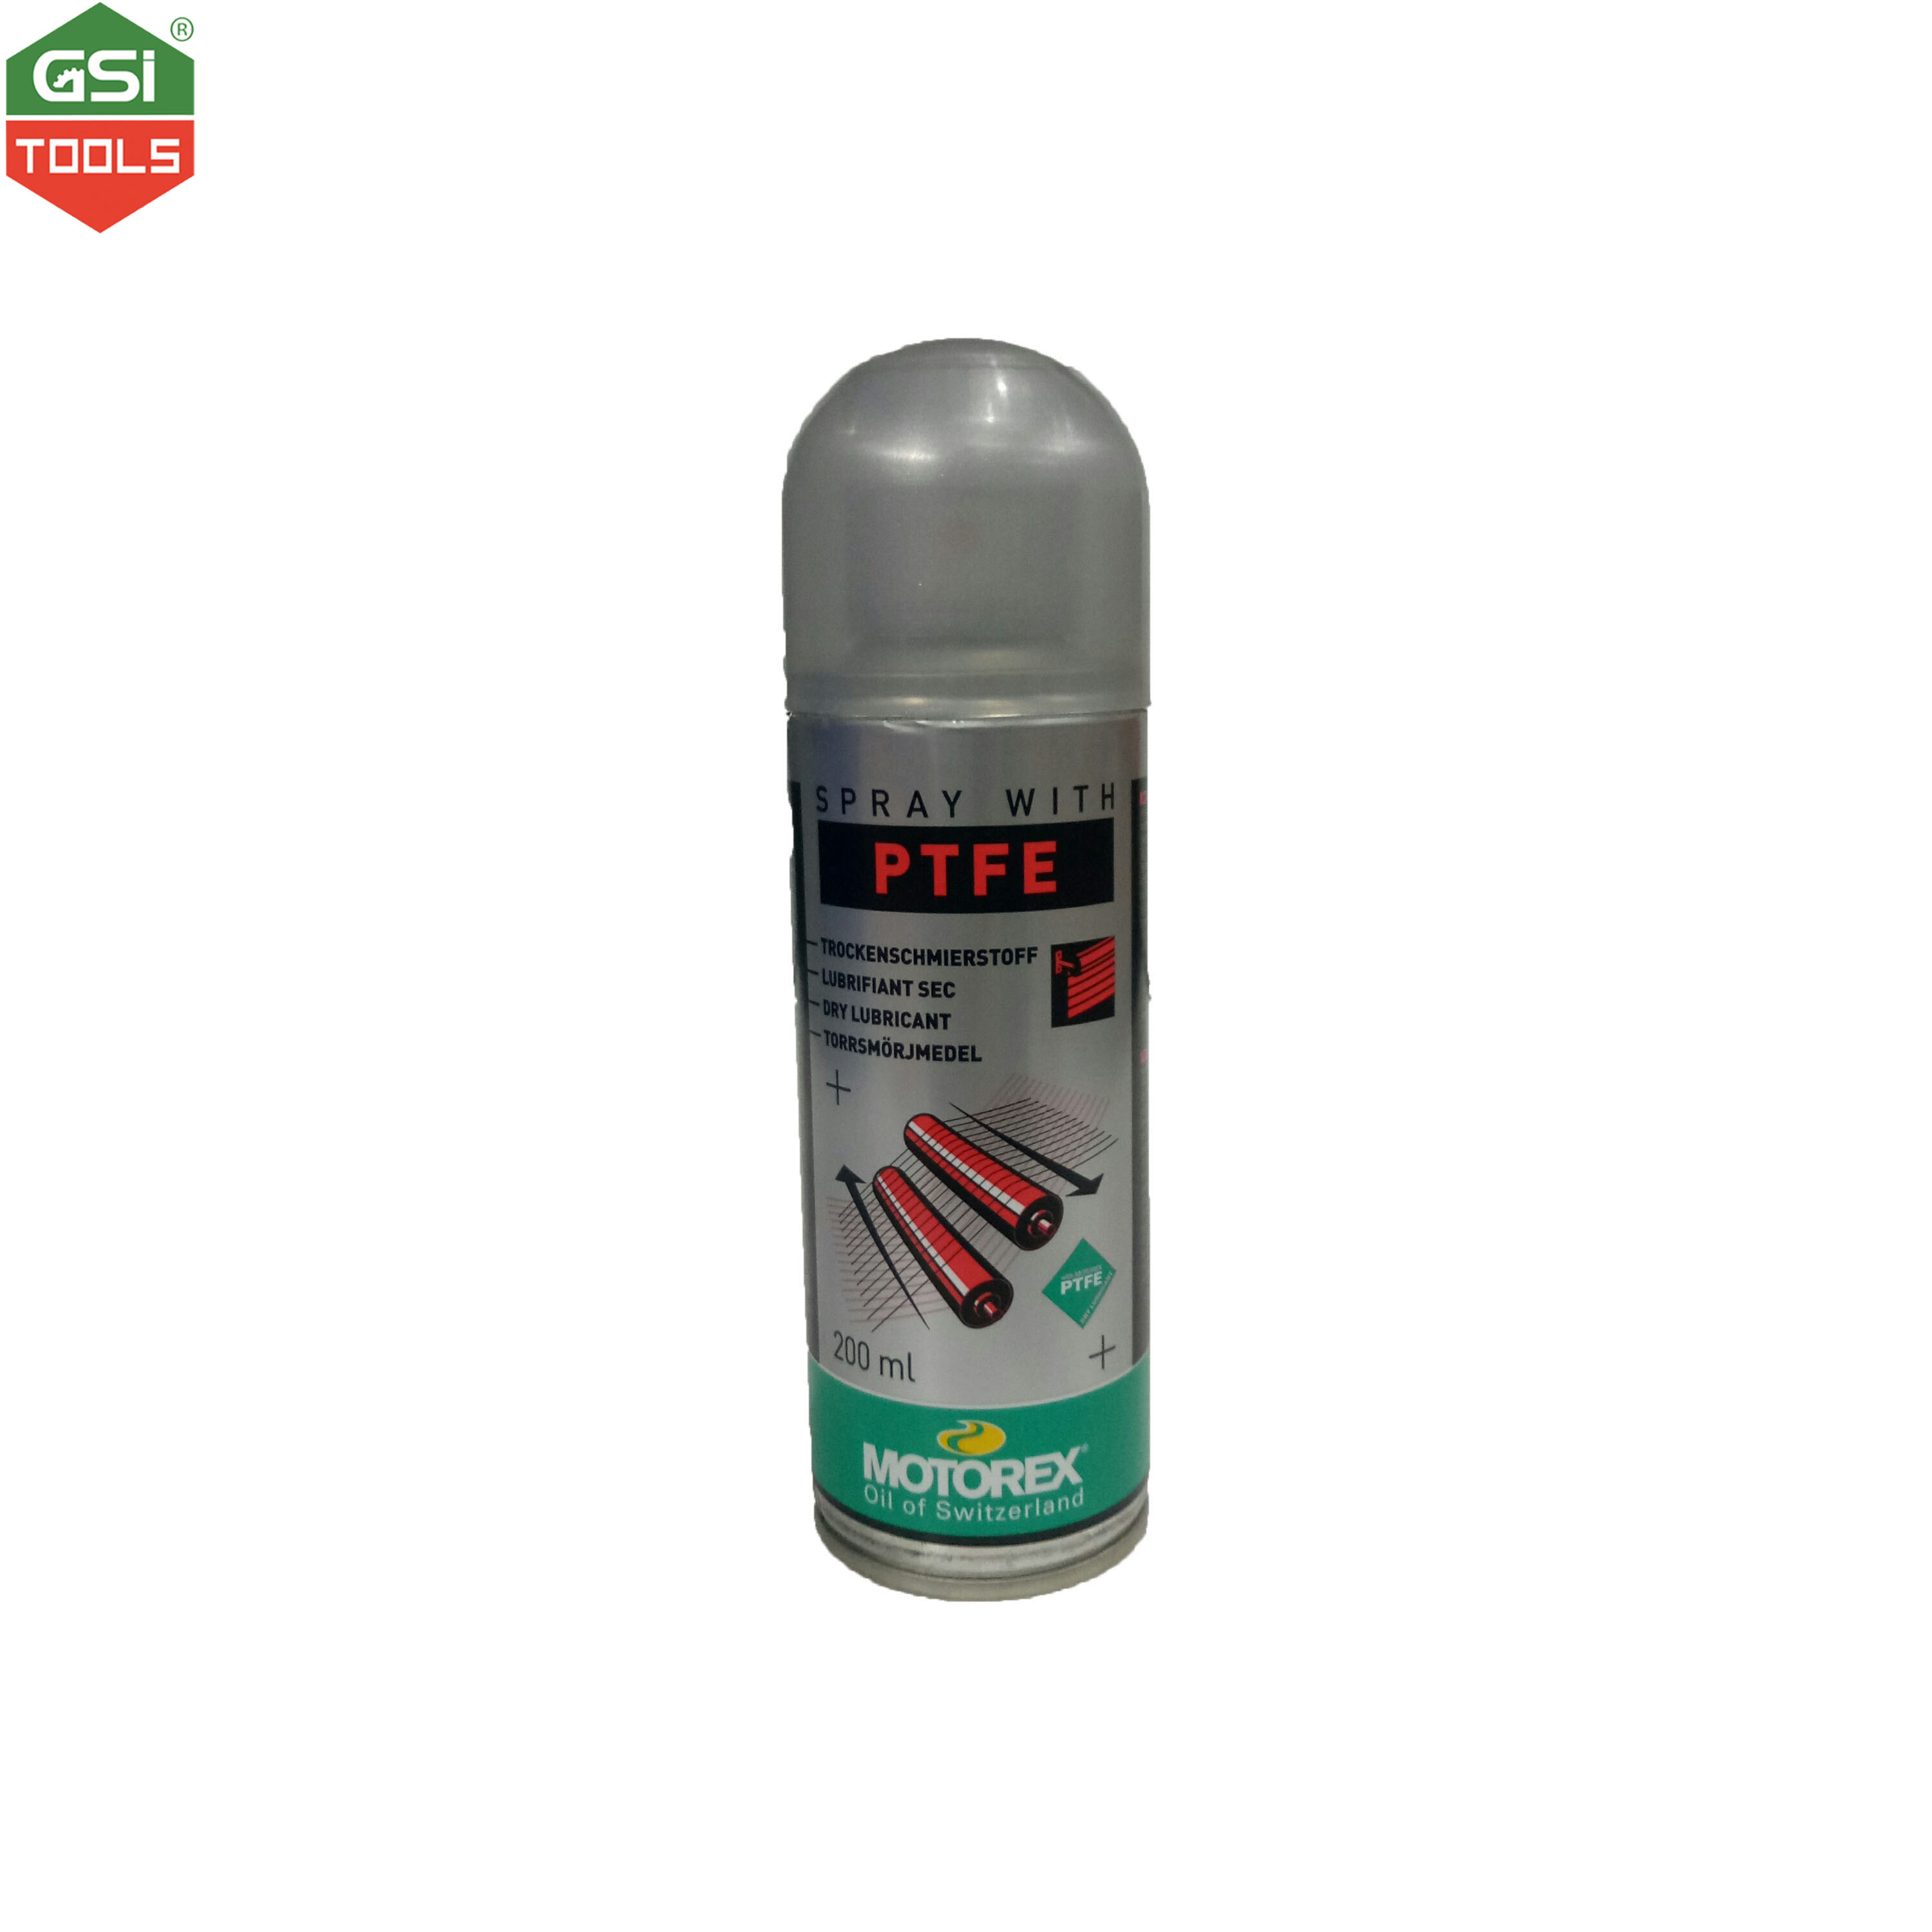 Mỡ bôi trơn chống bám dính Spray with PTFE 302349 Motorex